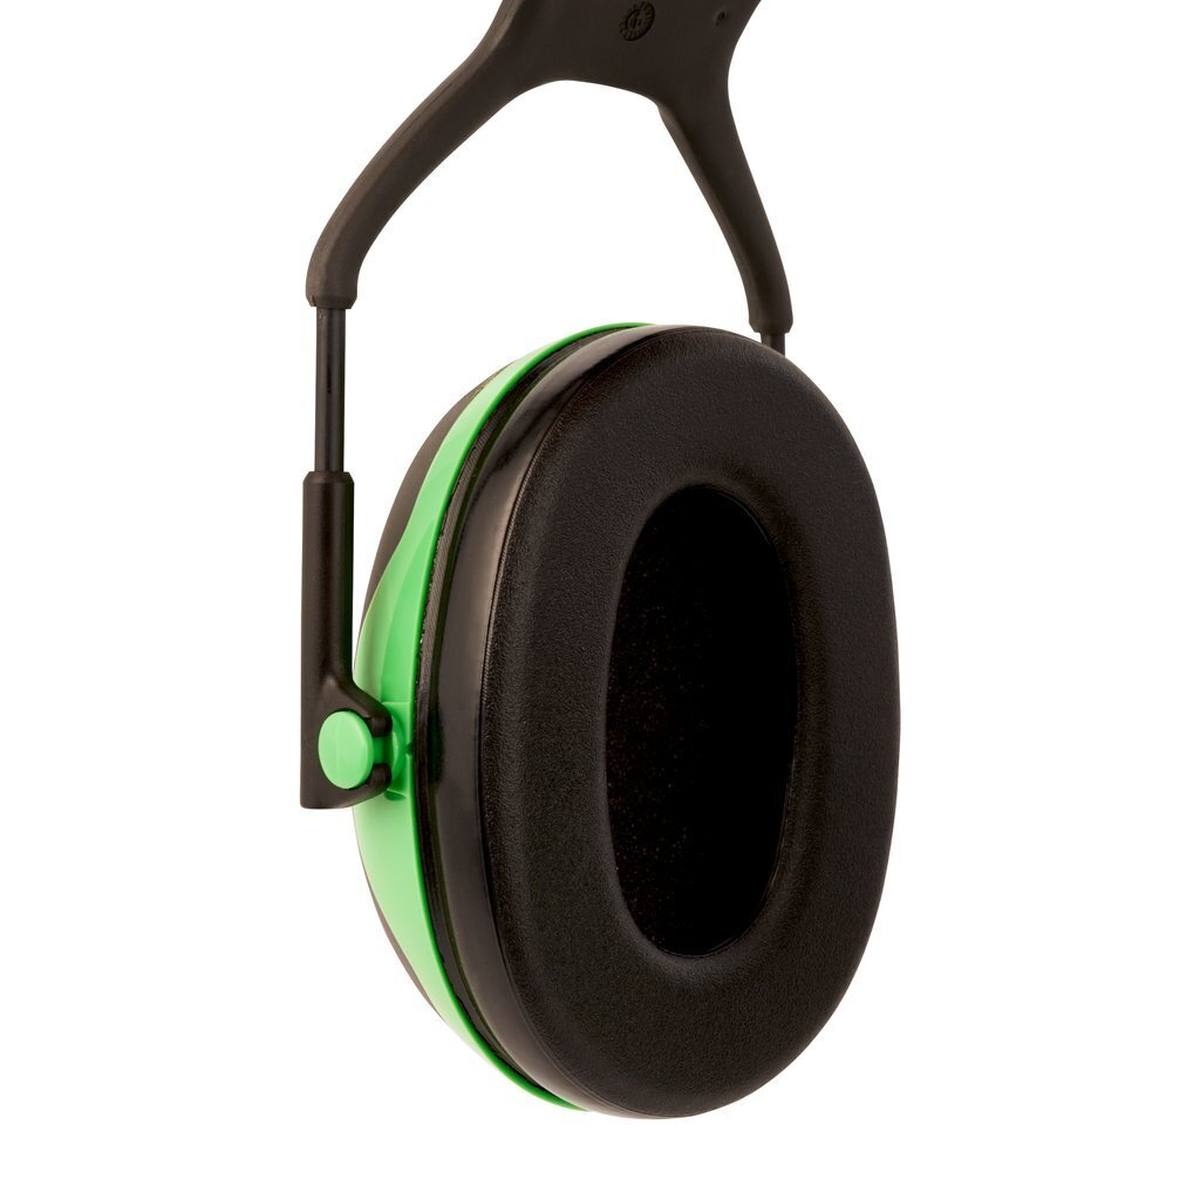 3M Peltor-kuulonsuojaimet, X1A-kuulonsuojaimet, vihreä, SNR = 27 dB.